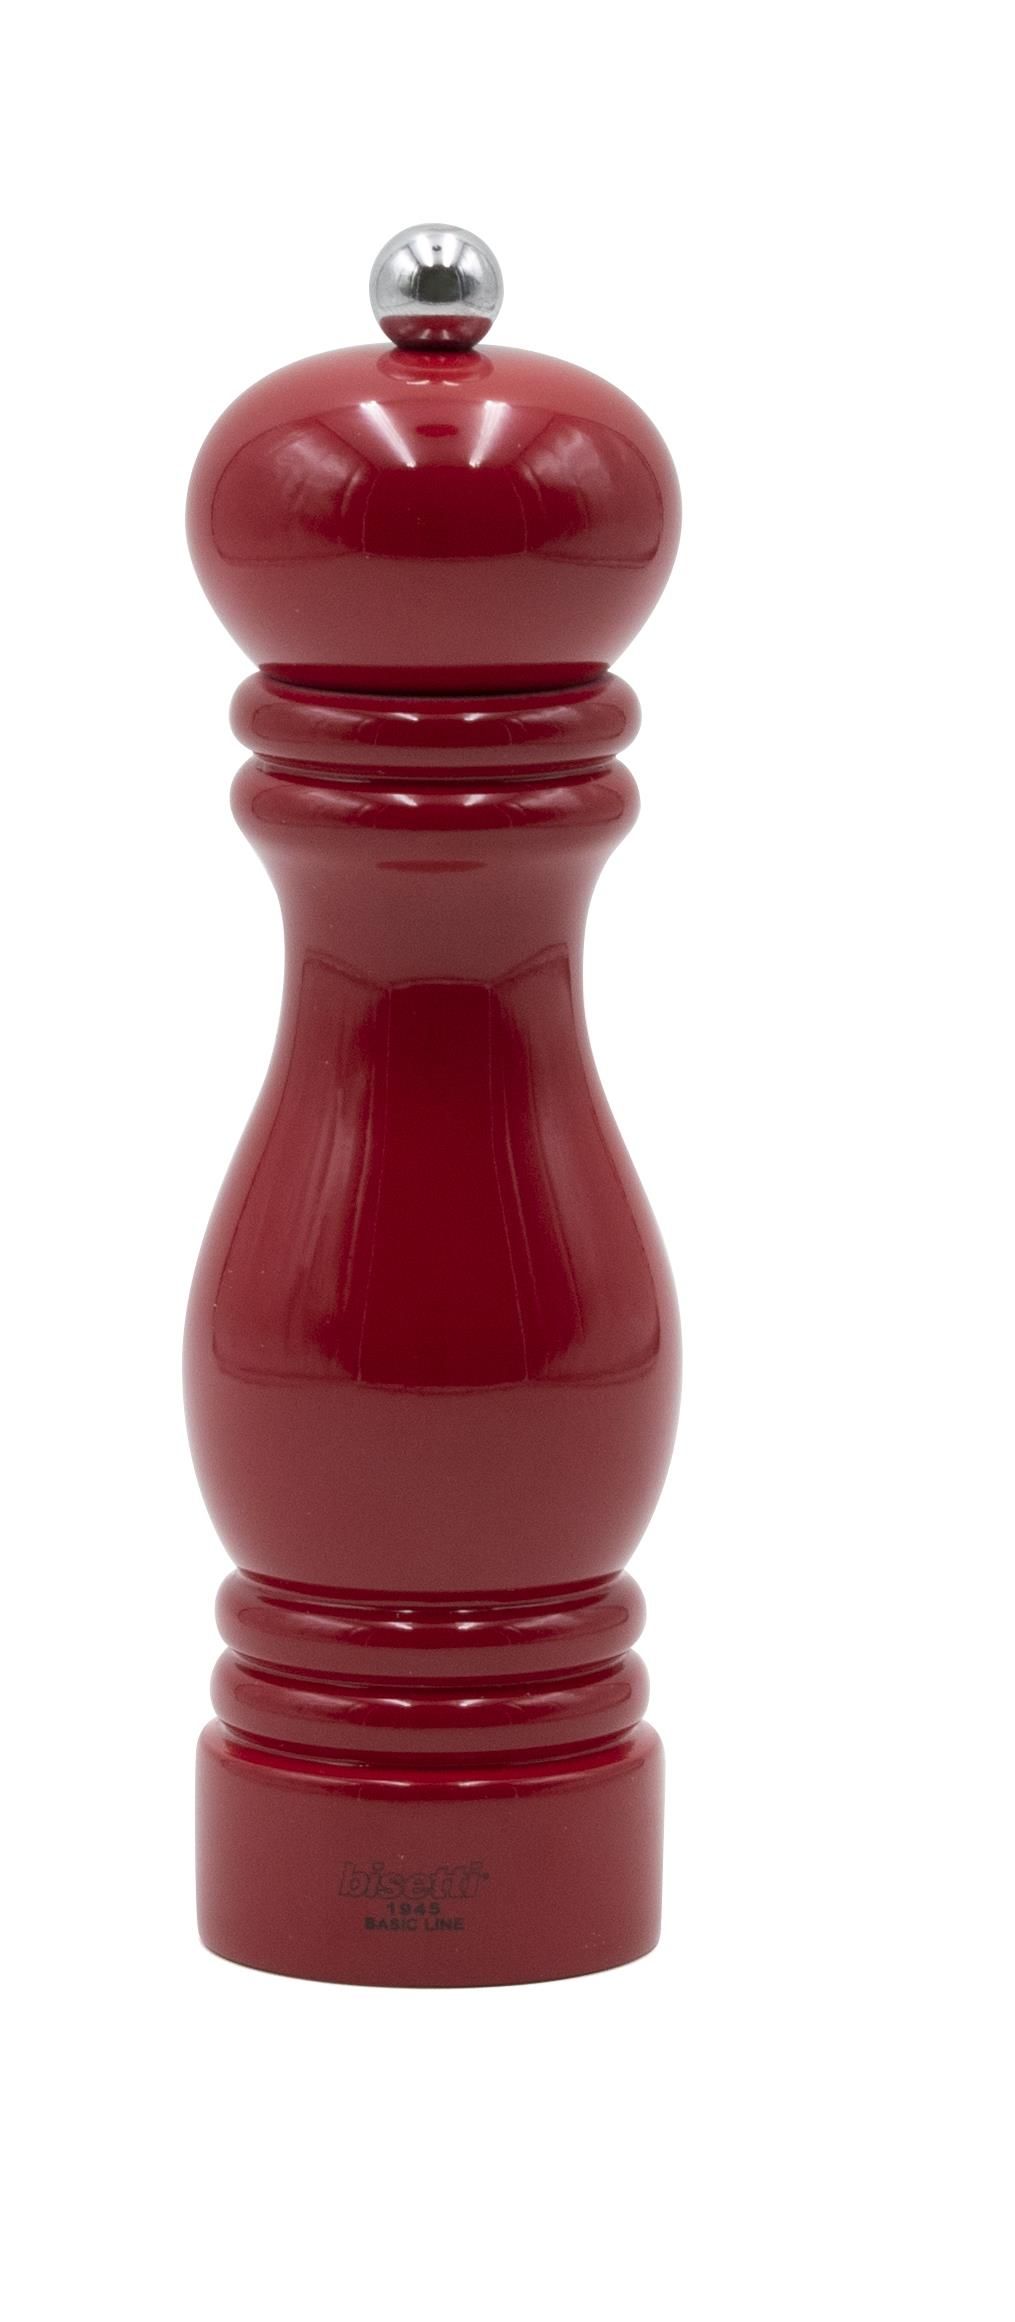 Мельница для перца из бука, красная лакированная, 19 cm